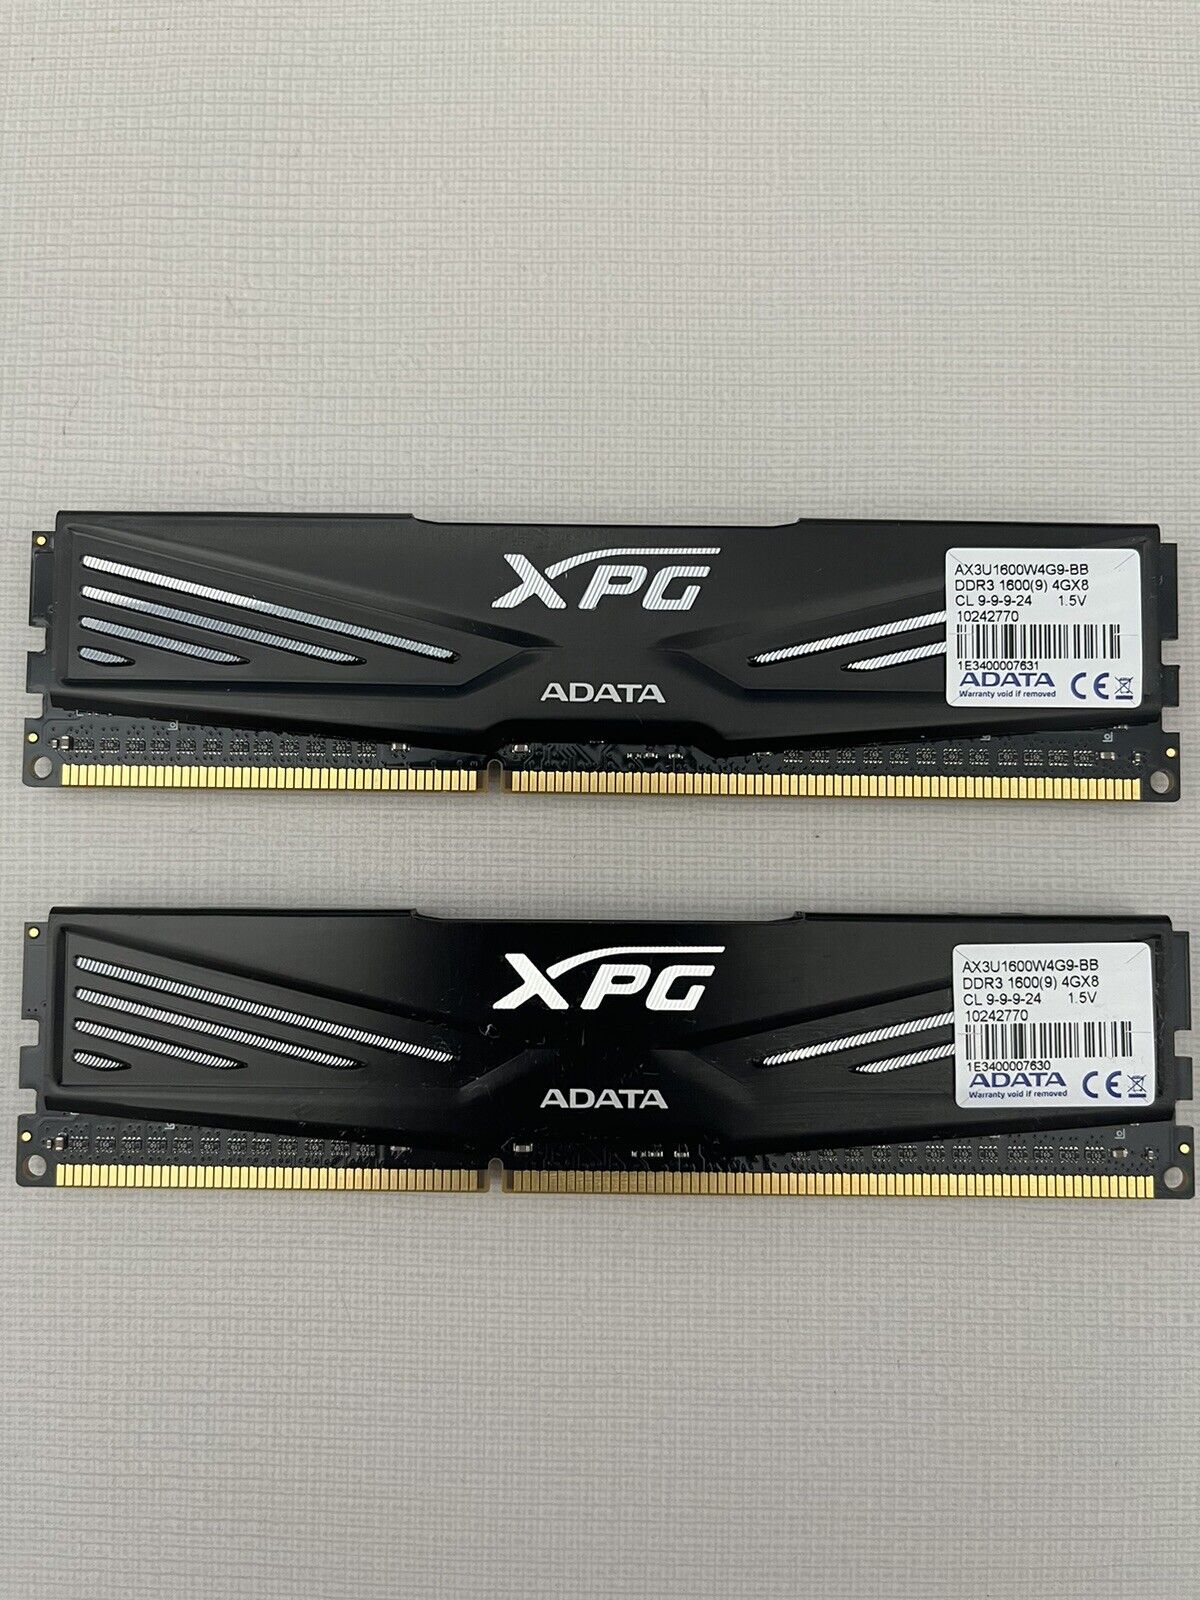 ADATA XPG V1 DDR3 1600MHz (PC3 12800) 8GB (4GBx2) Memory Modules (AX3U1600W4G9-B